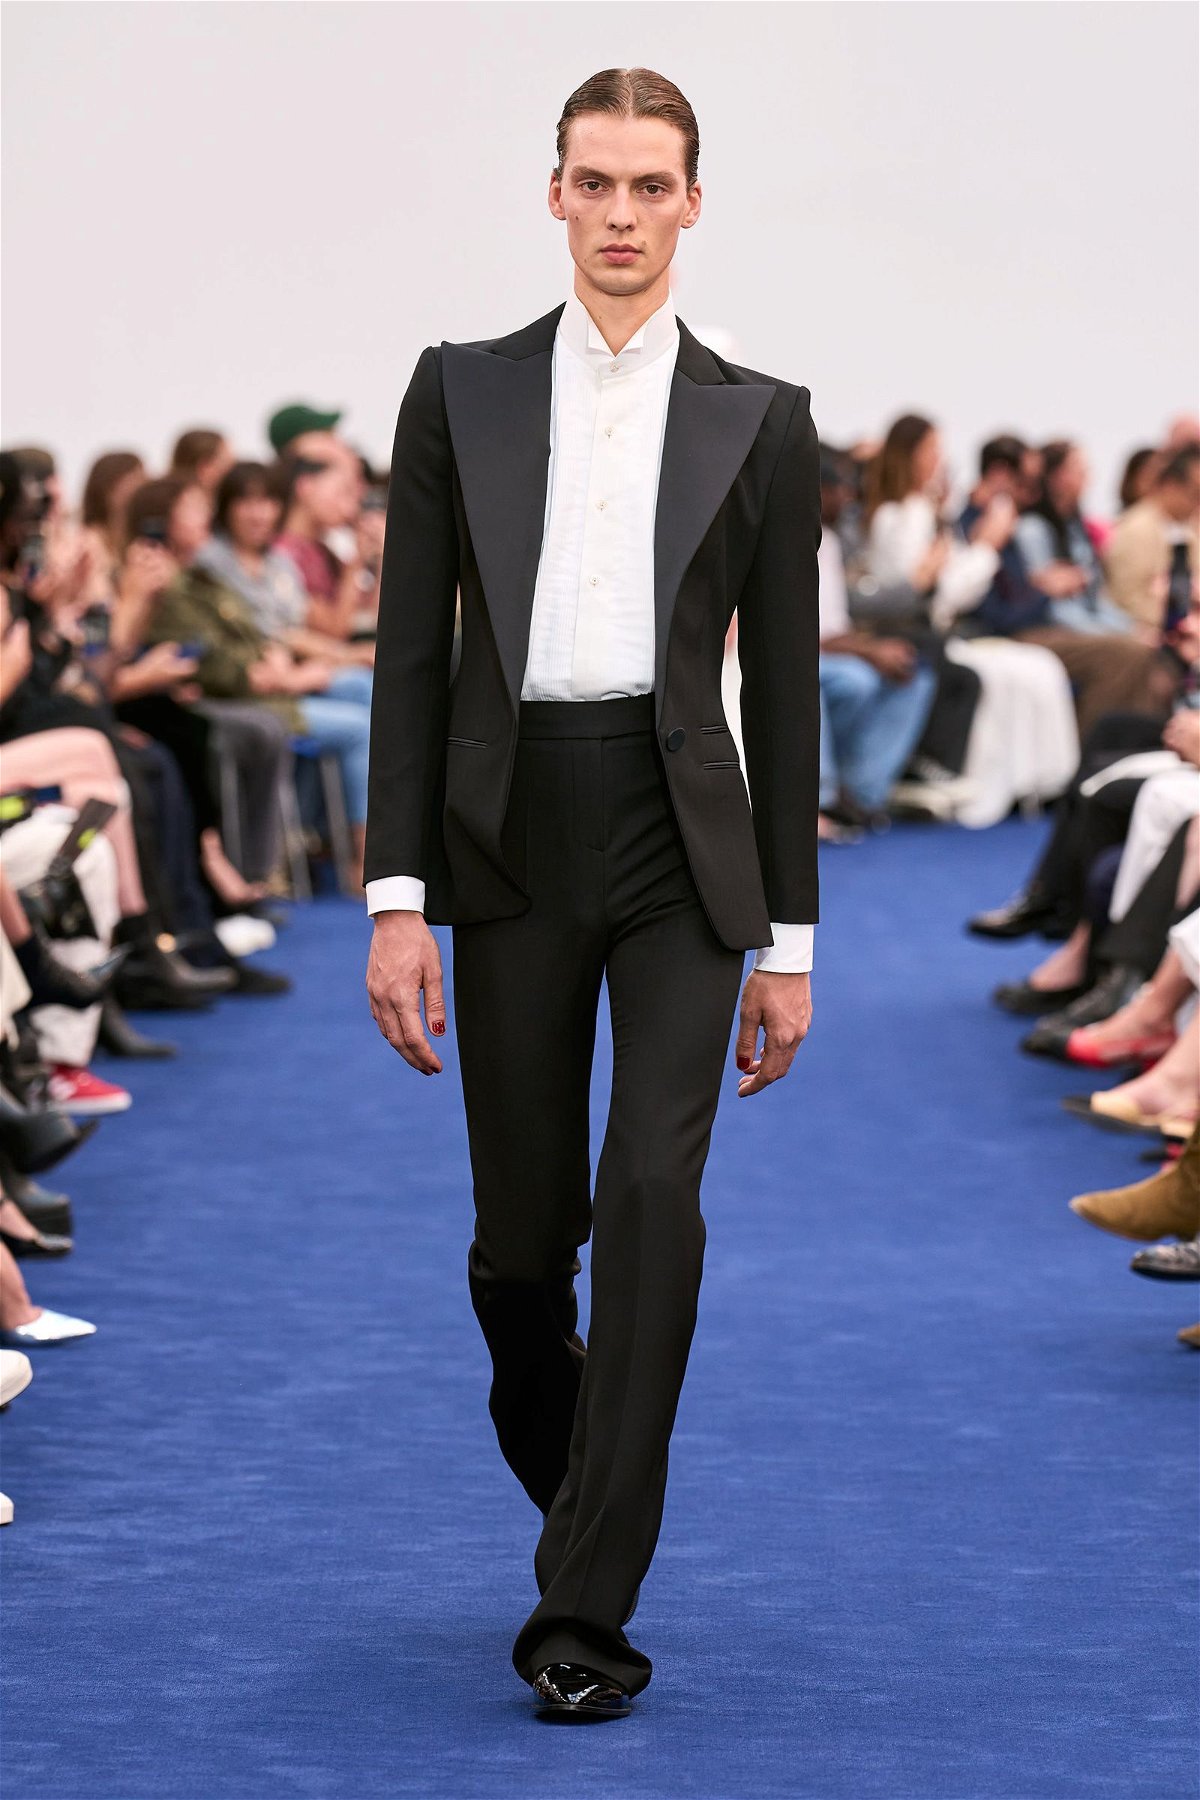 Dior's Kim Jones sends models rising up from the floor at Paris